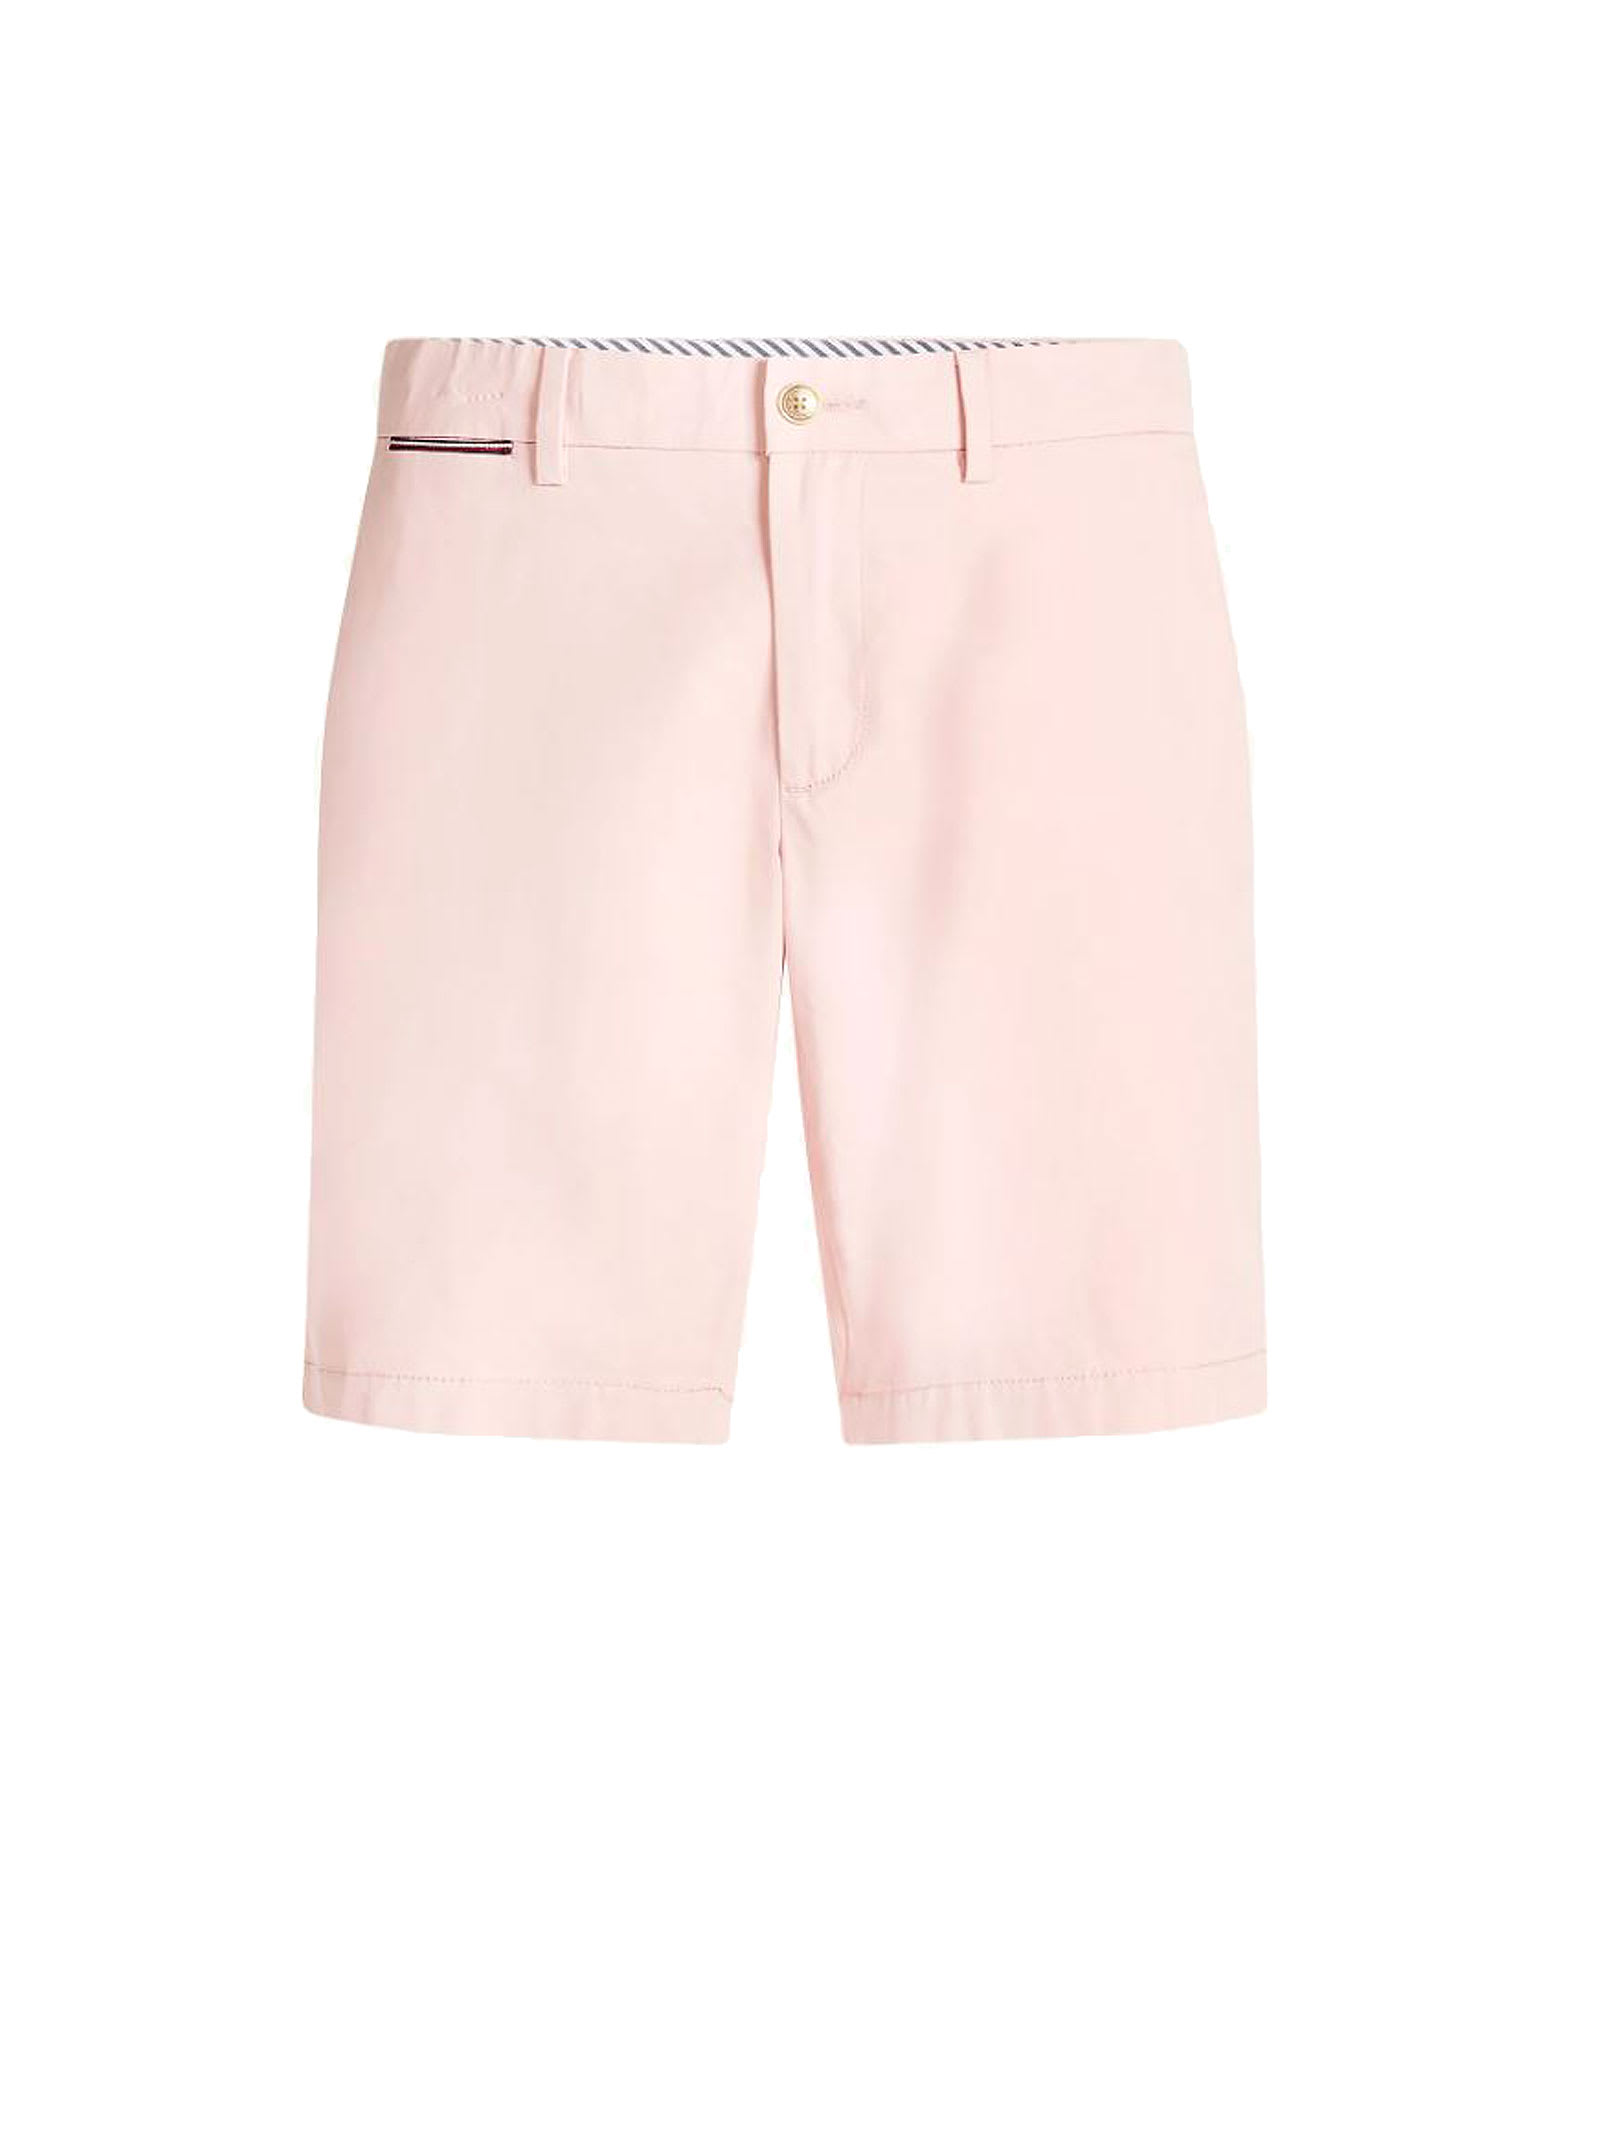 Tommy Hilfiger Pink Bermuda Shorts